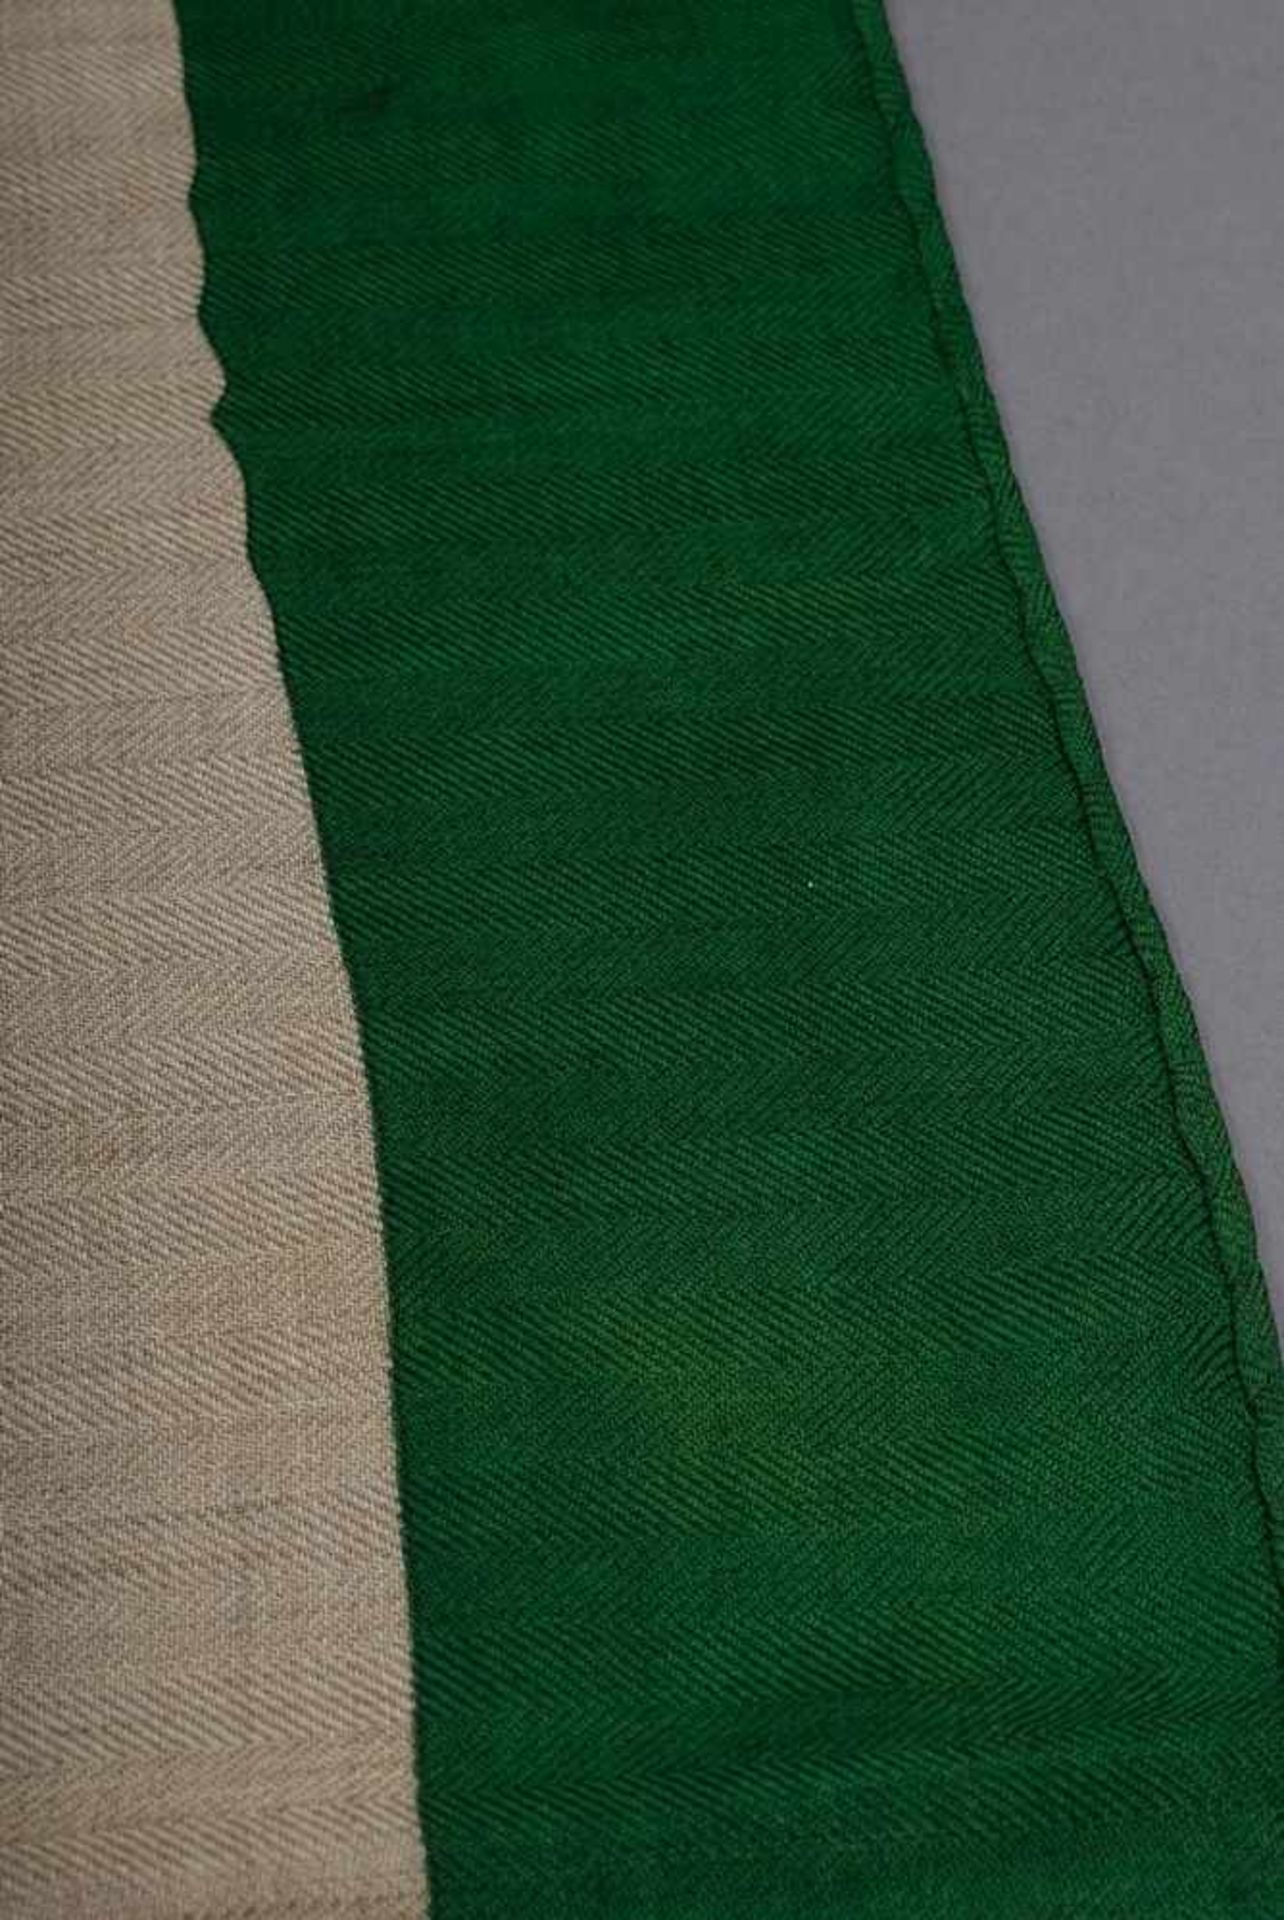 Hermès scarf "Tourbillons" beige/green, designed by Christiane de Vauzelles 1968, cashmere/silk, - Bild 6 aus 6